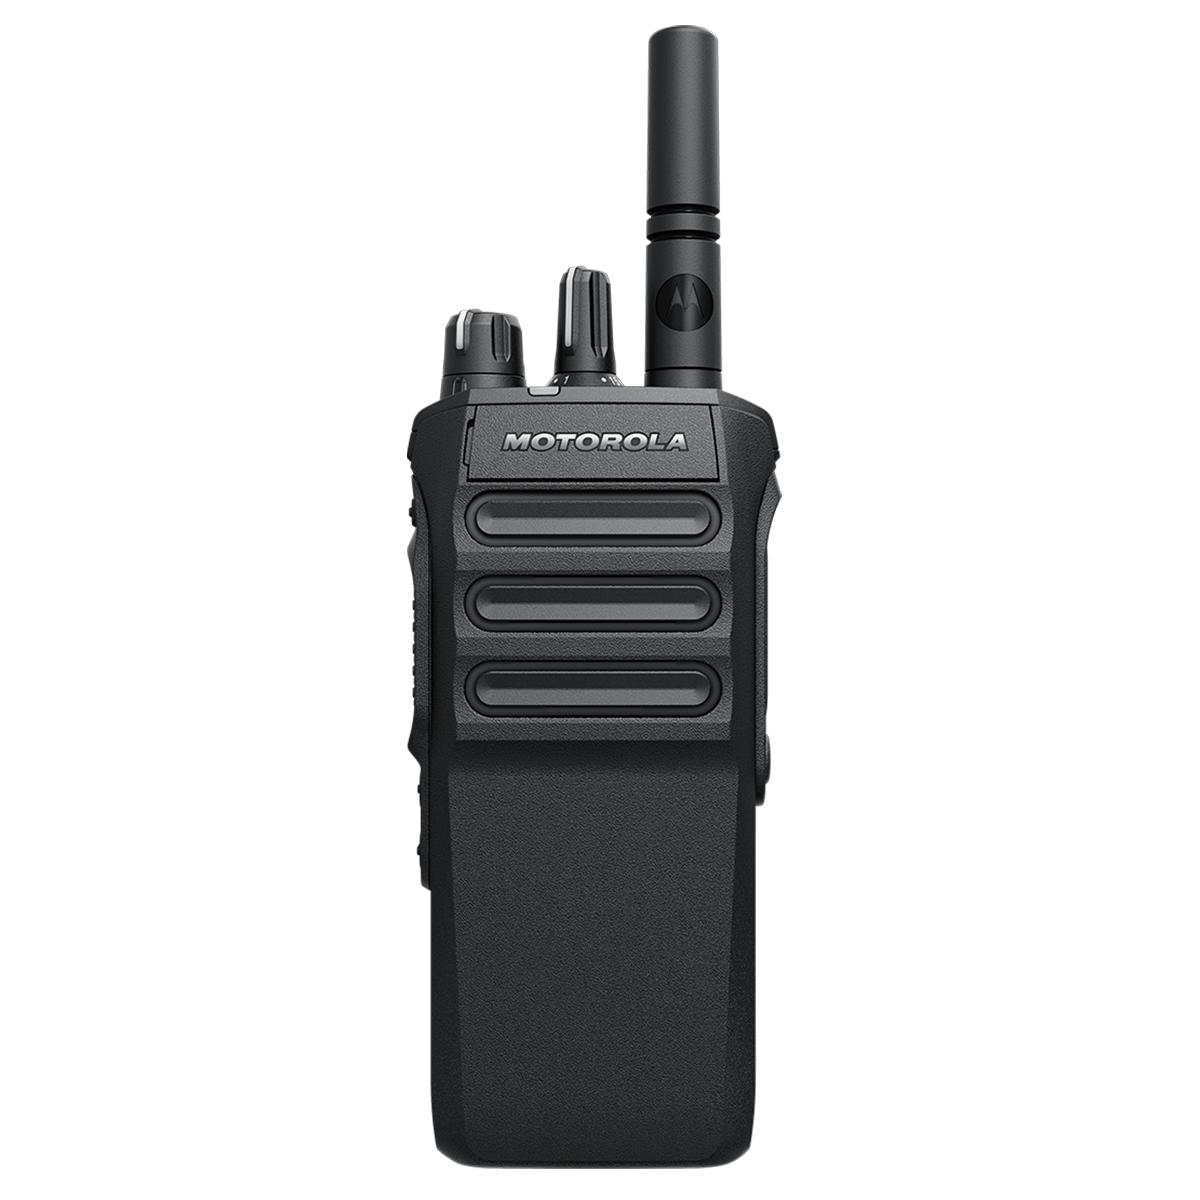 Radio Motorola R7 1000 Ch 4W UHF 403-527MHz TIA Capable NKP